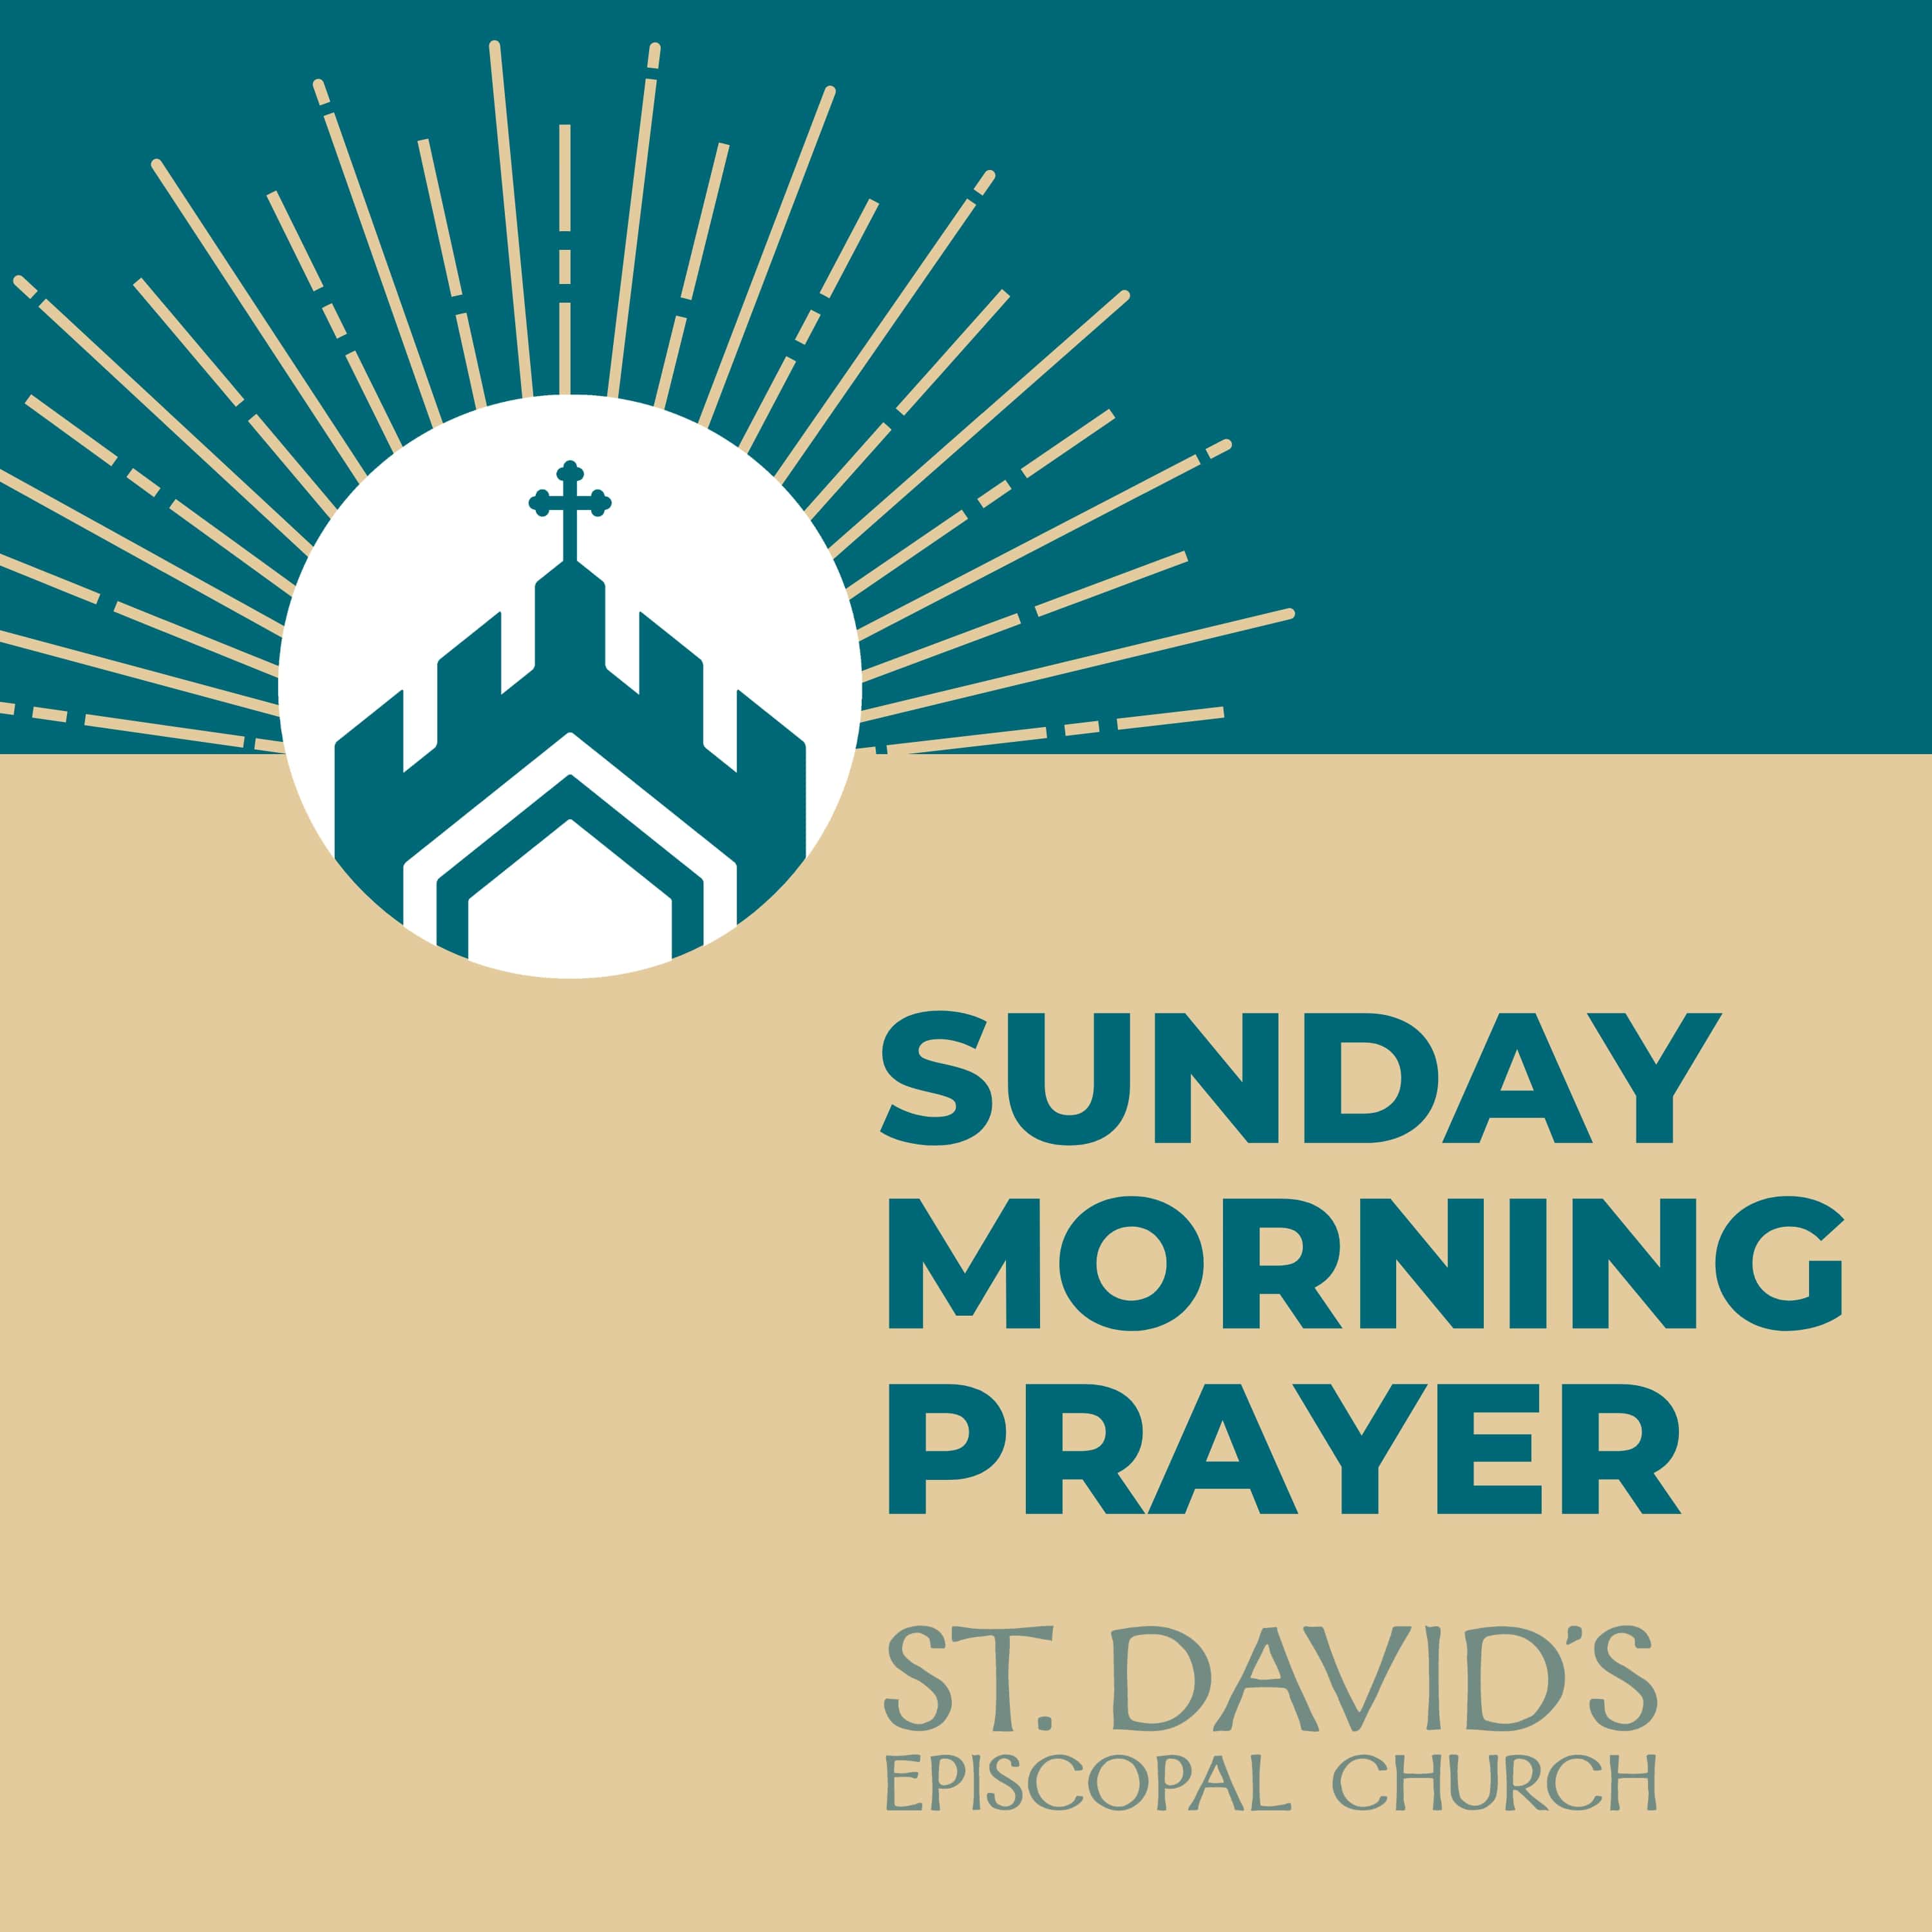 Sunday Morning Prayer: Rite Two, Year 1, 1st Sunday in Christmas